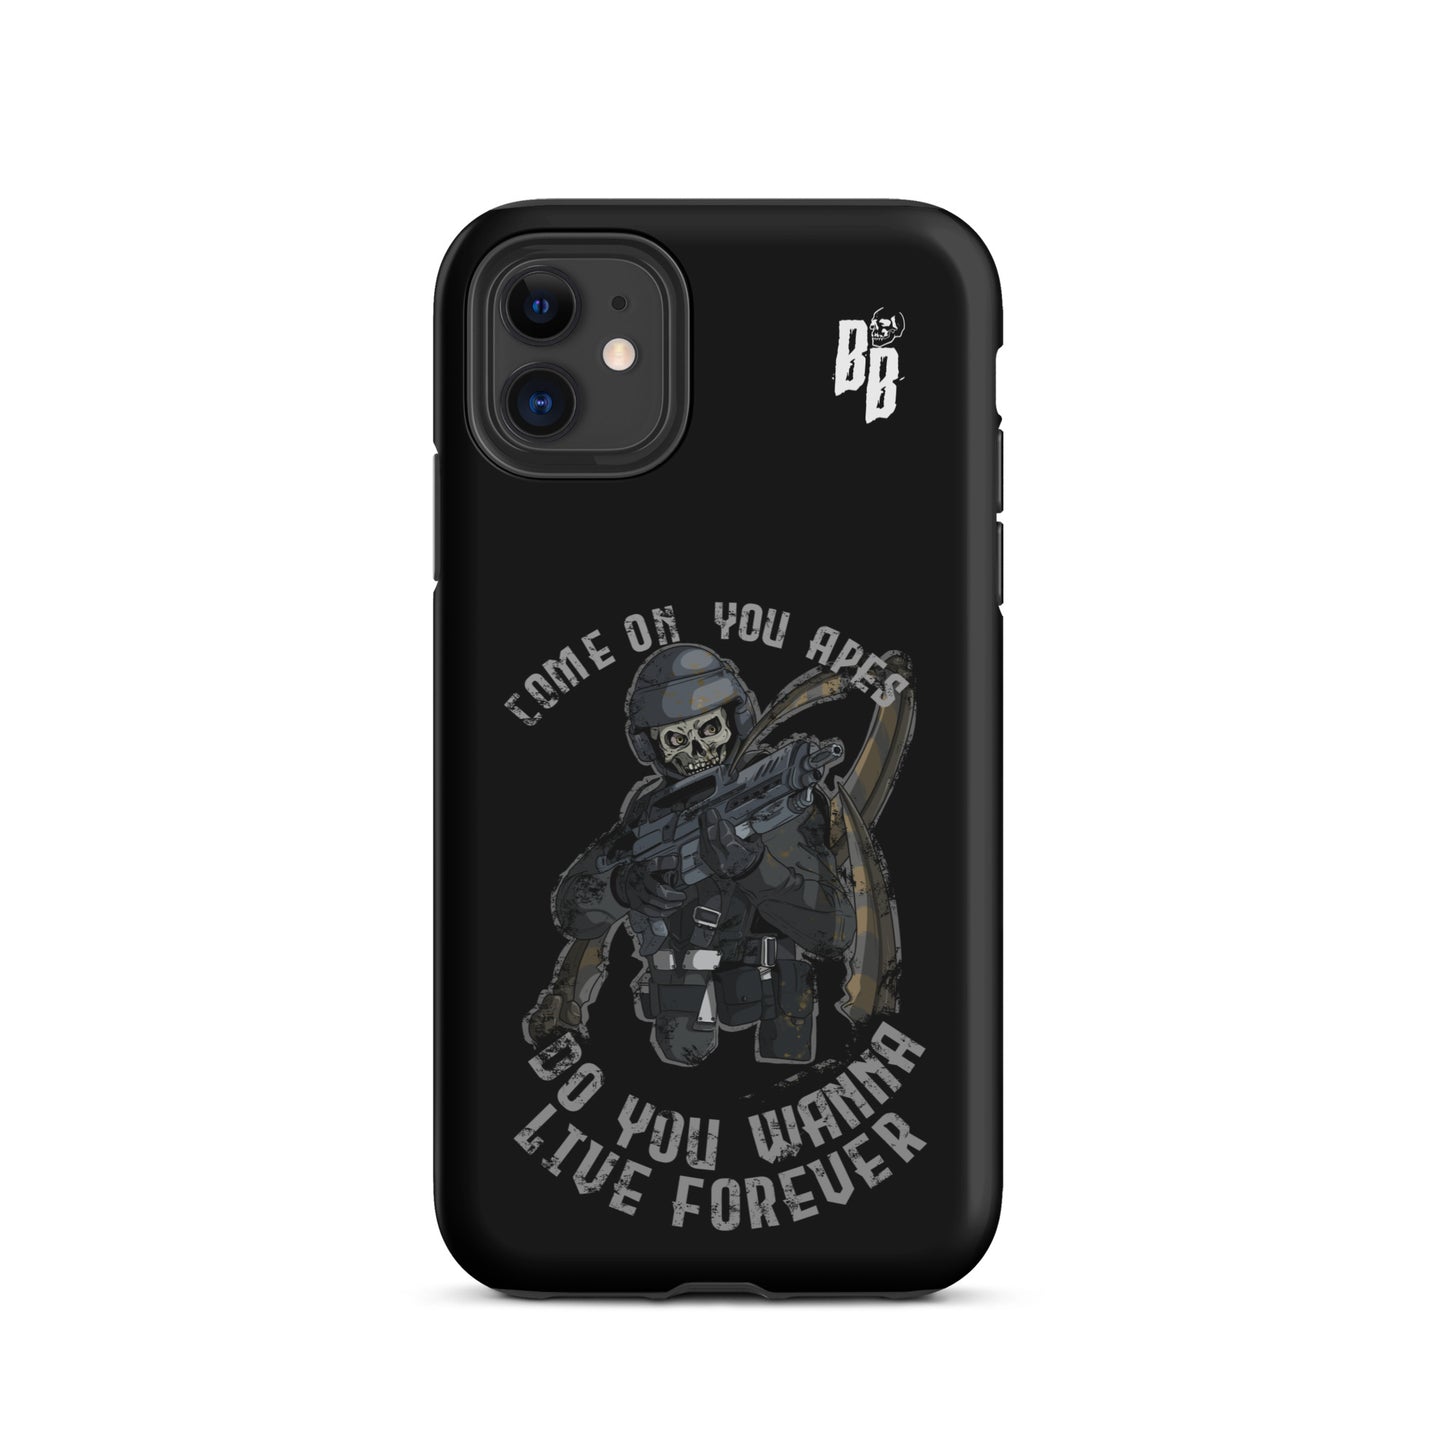 Apes iPhone® case